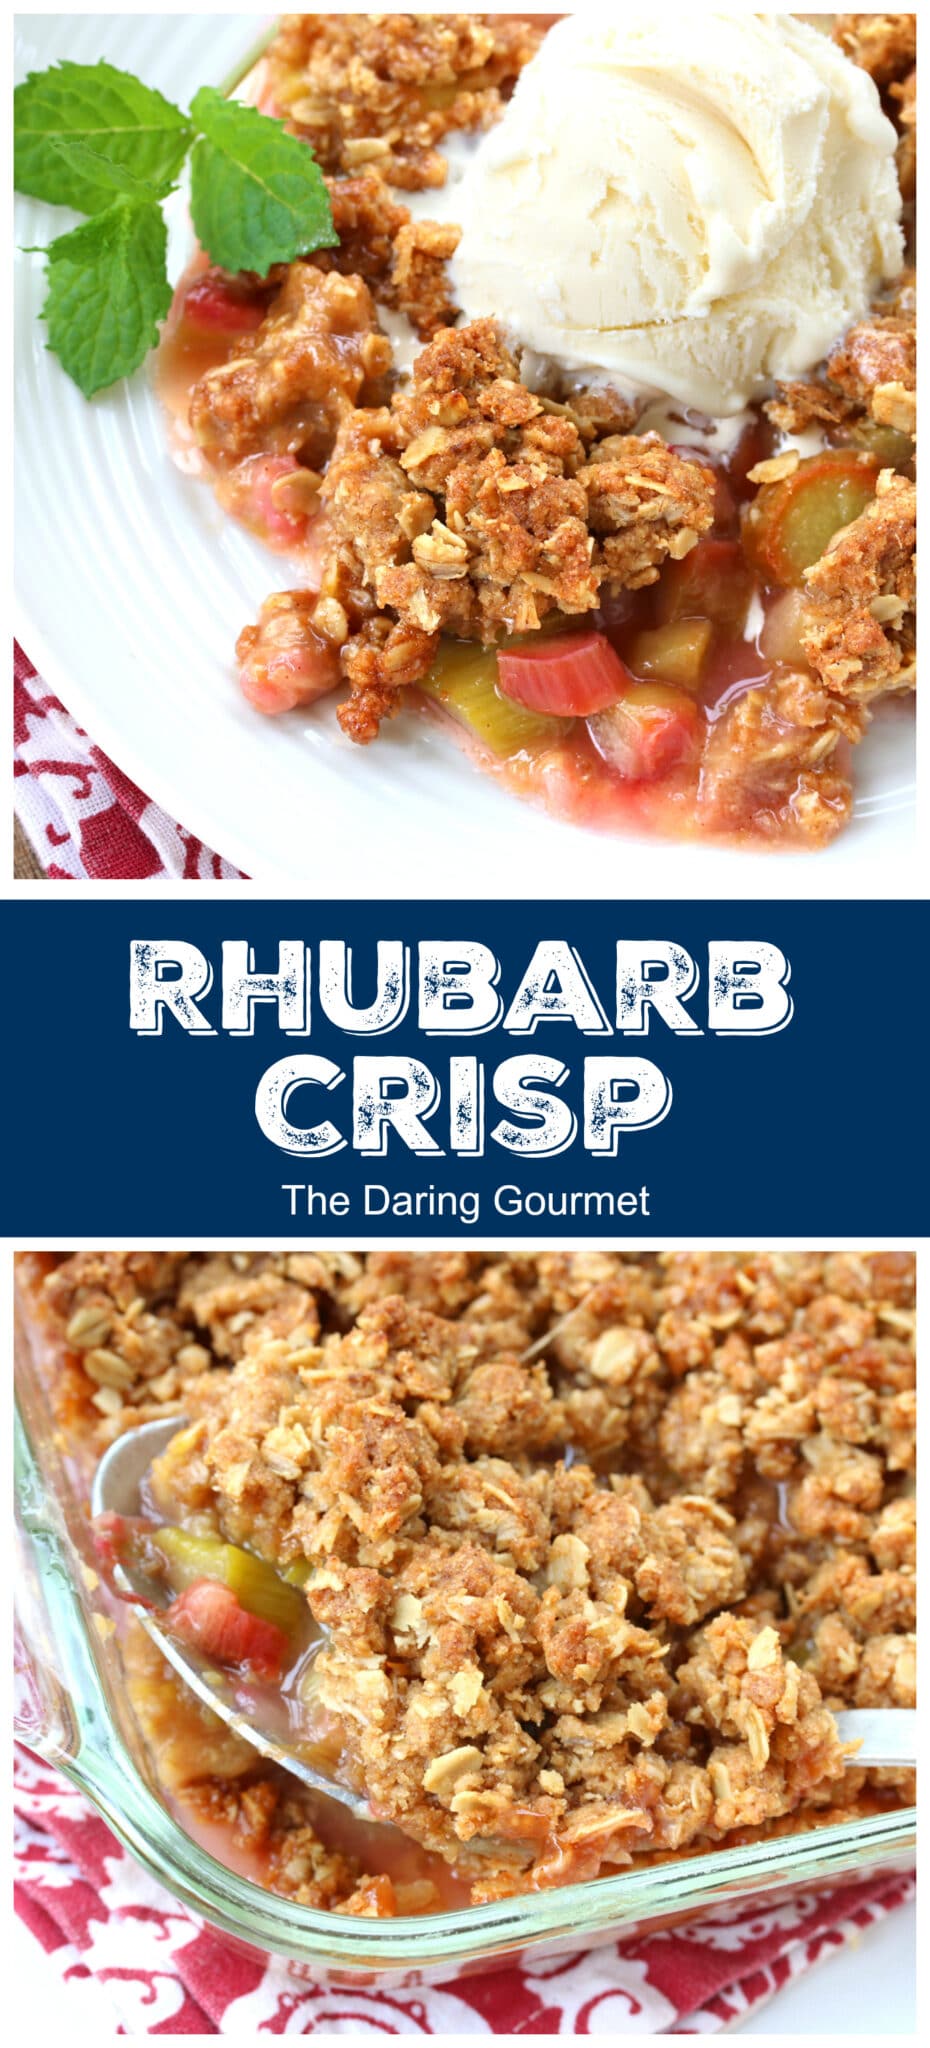 rhubarb crisp recipe best homemade crumble traditional oats brown sugar nuts almond flour crunchy vanilla